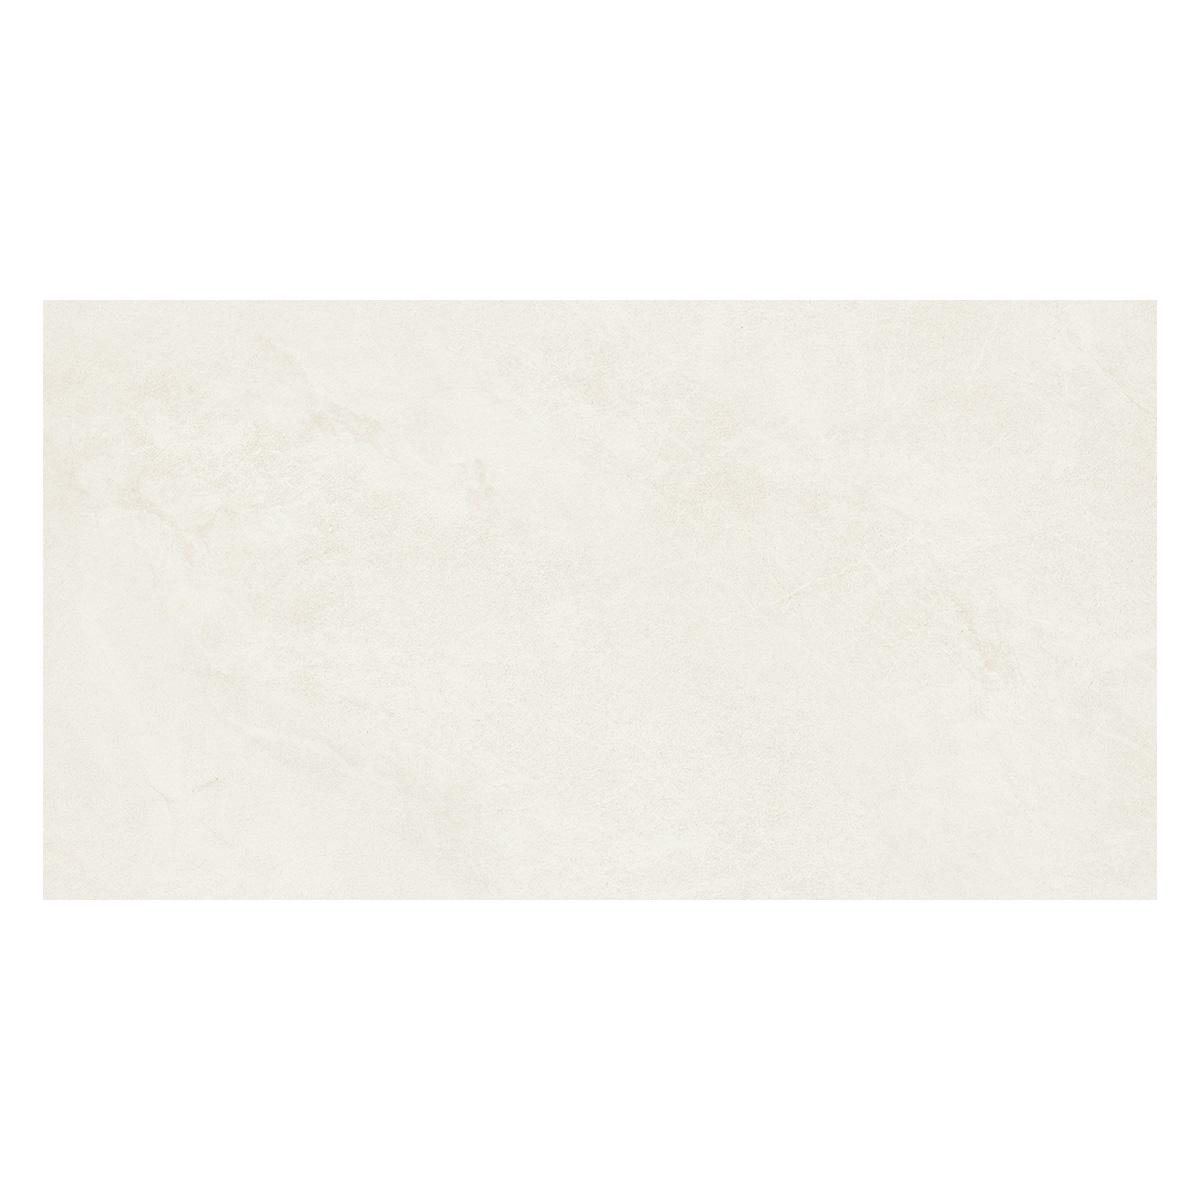 Porcelanato Muse Blanco Brillante - 60X120 cm - 1.44 m2